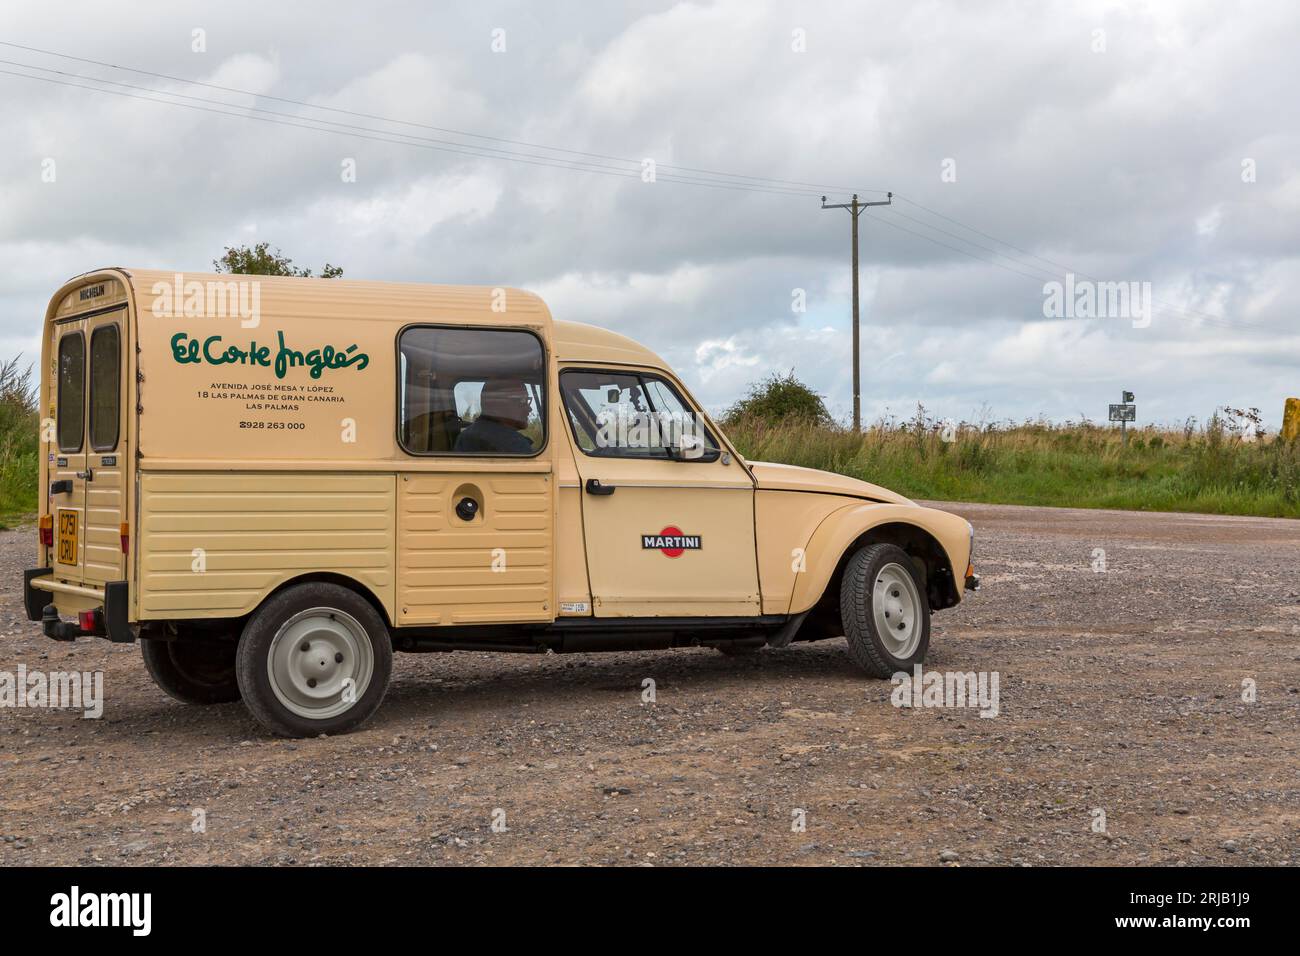 Beige Citroen ACADIANE van on road by New Zealand Farm Camp, Salisbury Plain, Wilshire UK in August Stock Photo